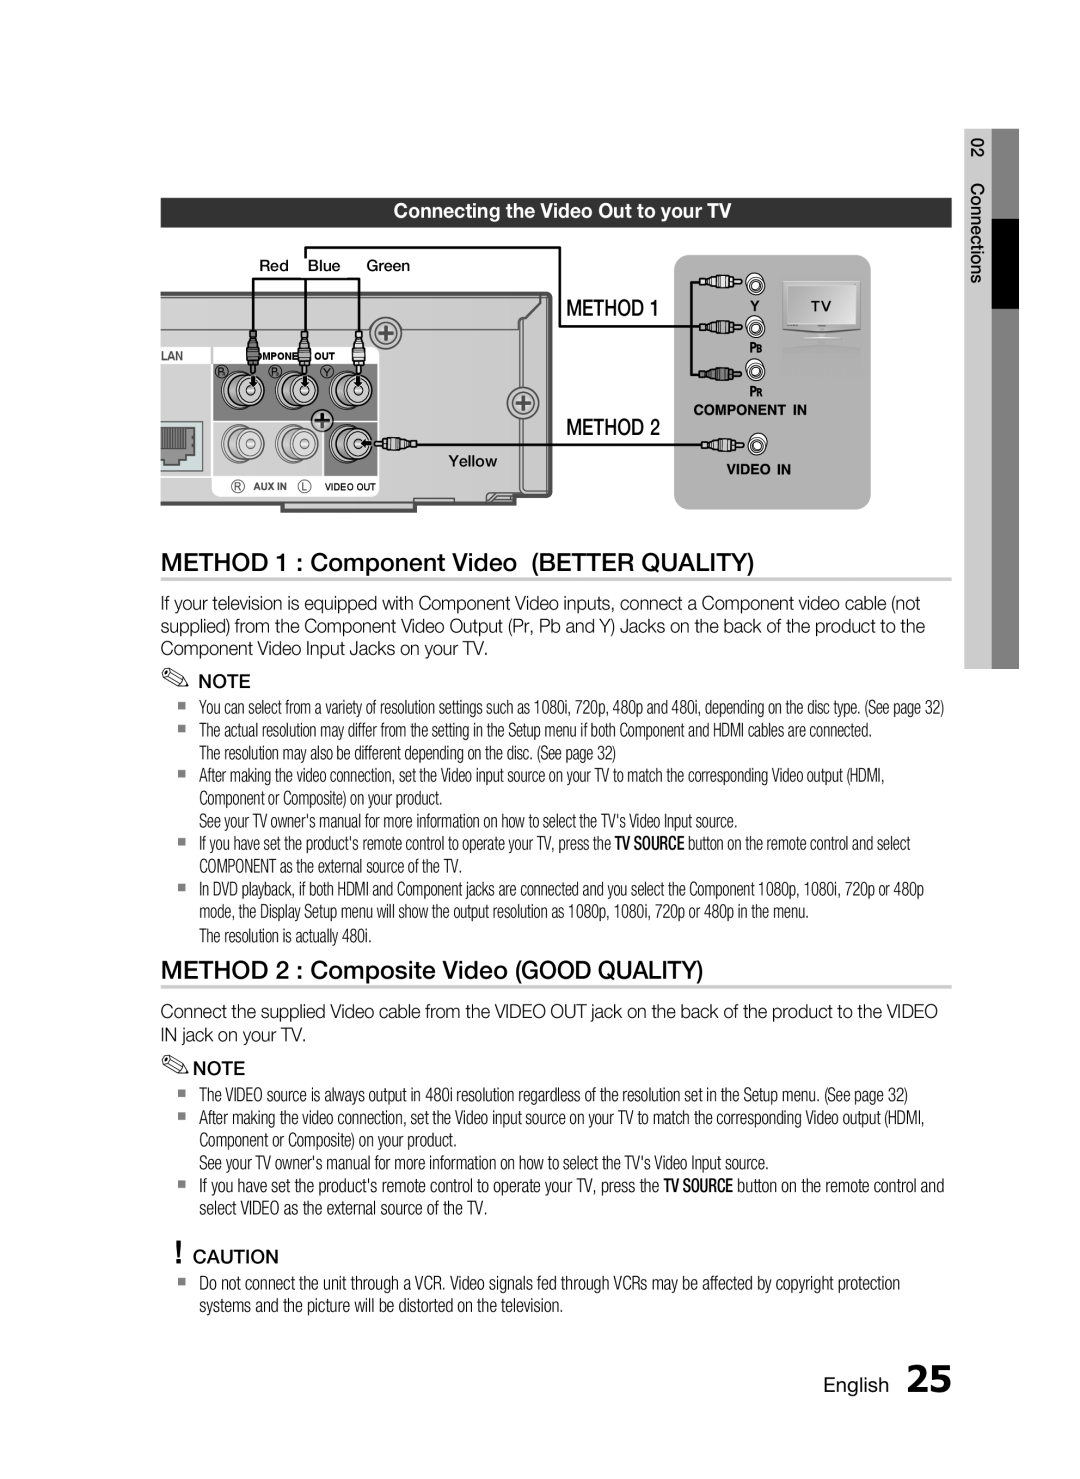 Samsung HT-C6730W METHOD 1 Component Video BETTER QUALITY, METHOD 2 Composite Video GOOD QUALITY, Method, English 